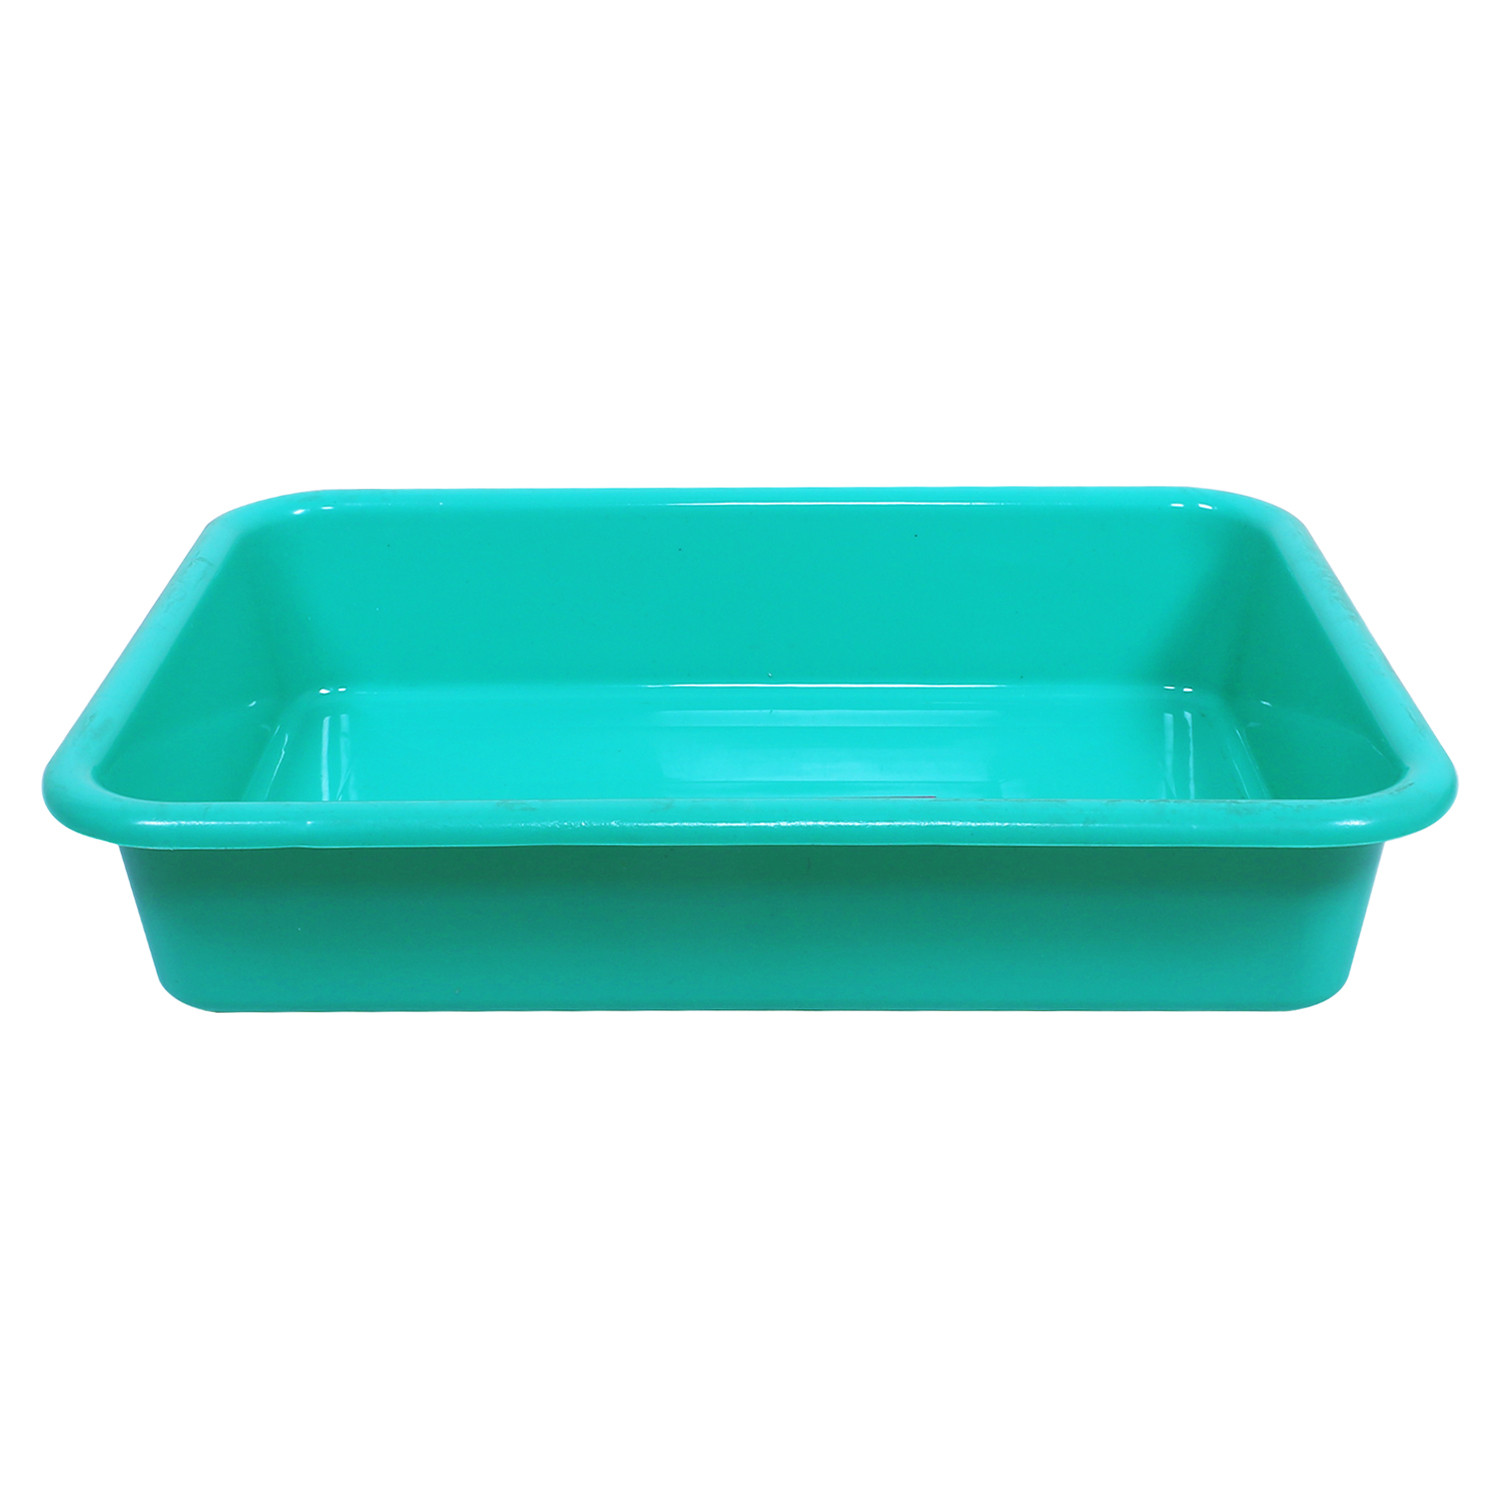 Kuber Industries Storage Tray|Versatile Plastic Storage Organizer|Rectangular Tray for Kitchen Storage|Storage Tray for office|Exel Tray 555|Pack of 3 (Multicolor)